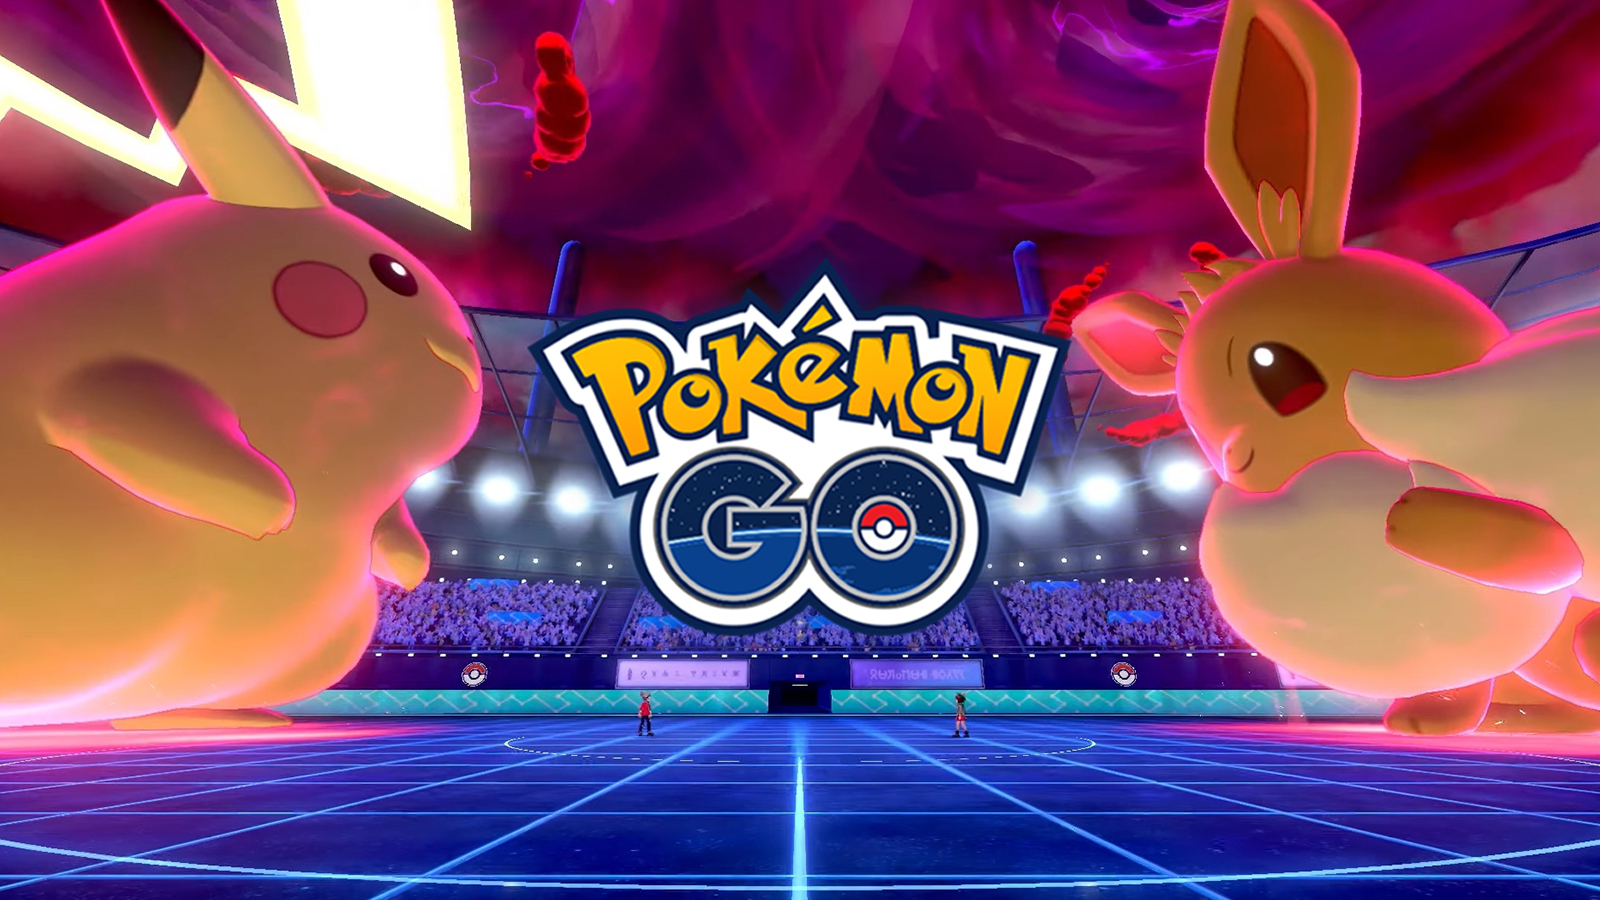 Pokémon GO Introduces New Battle Mechanic with Gigantic Pokémon